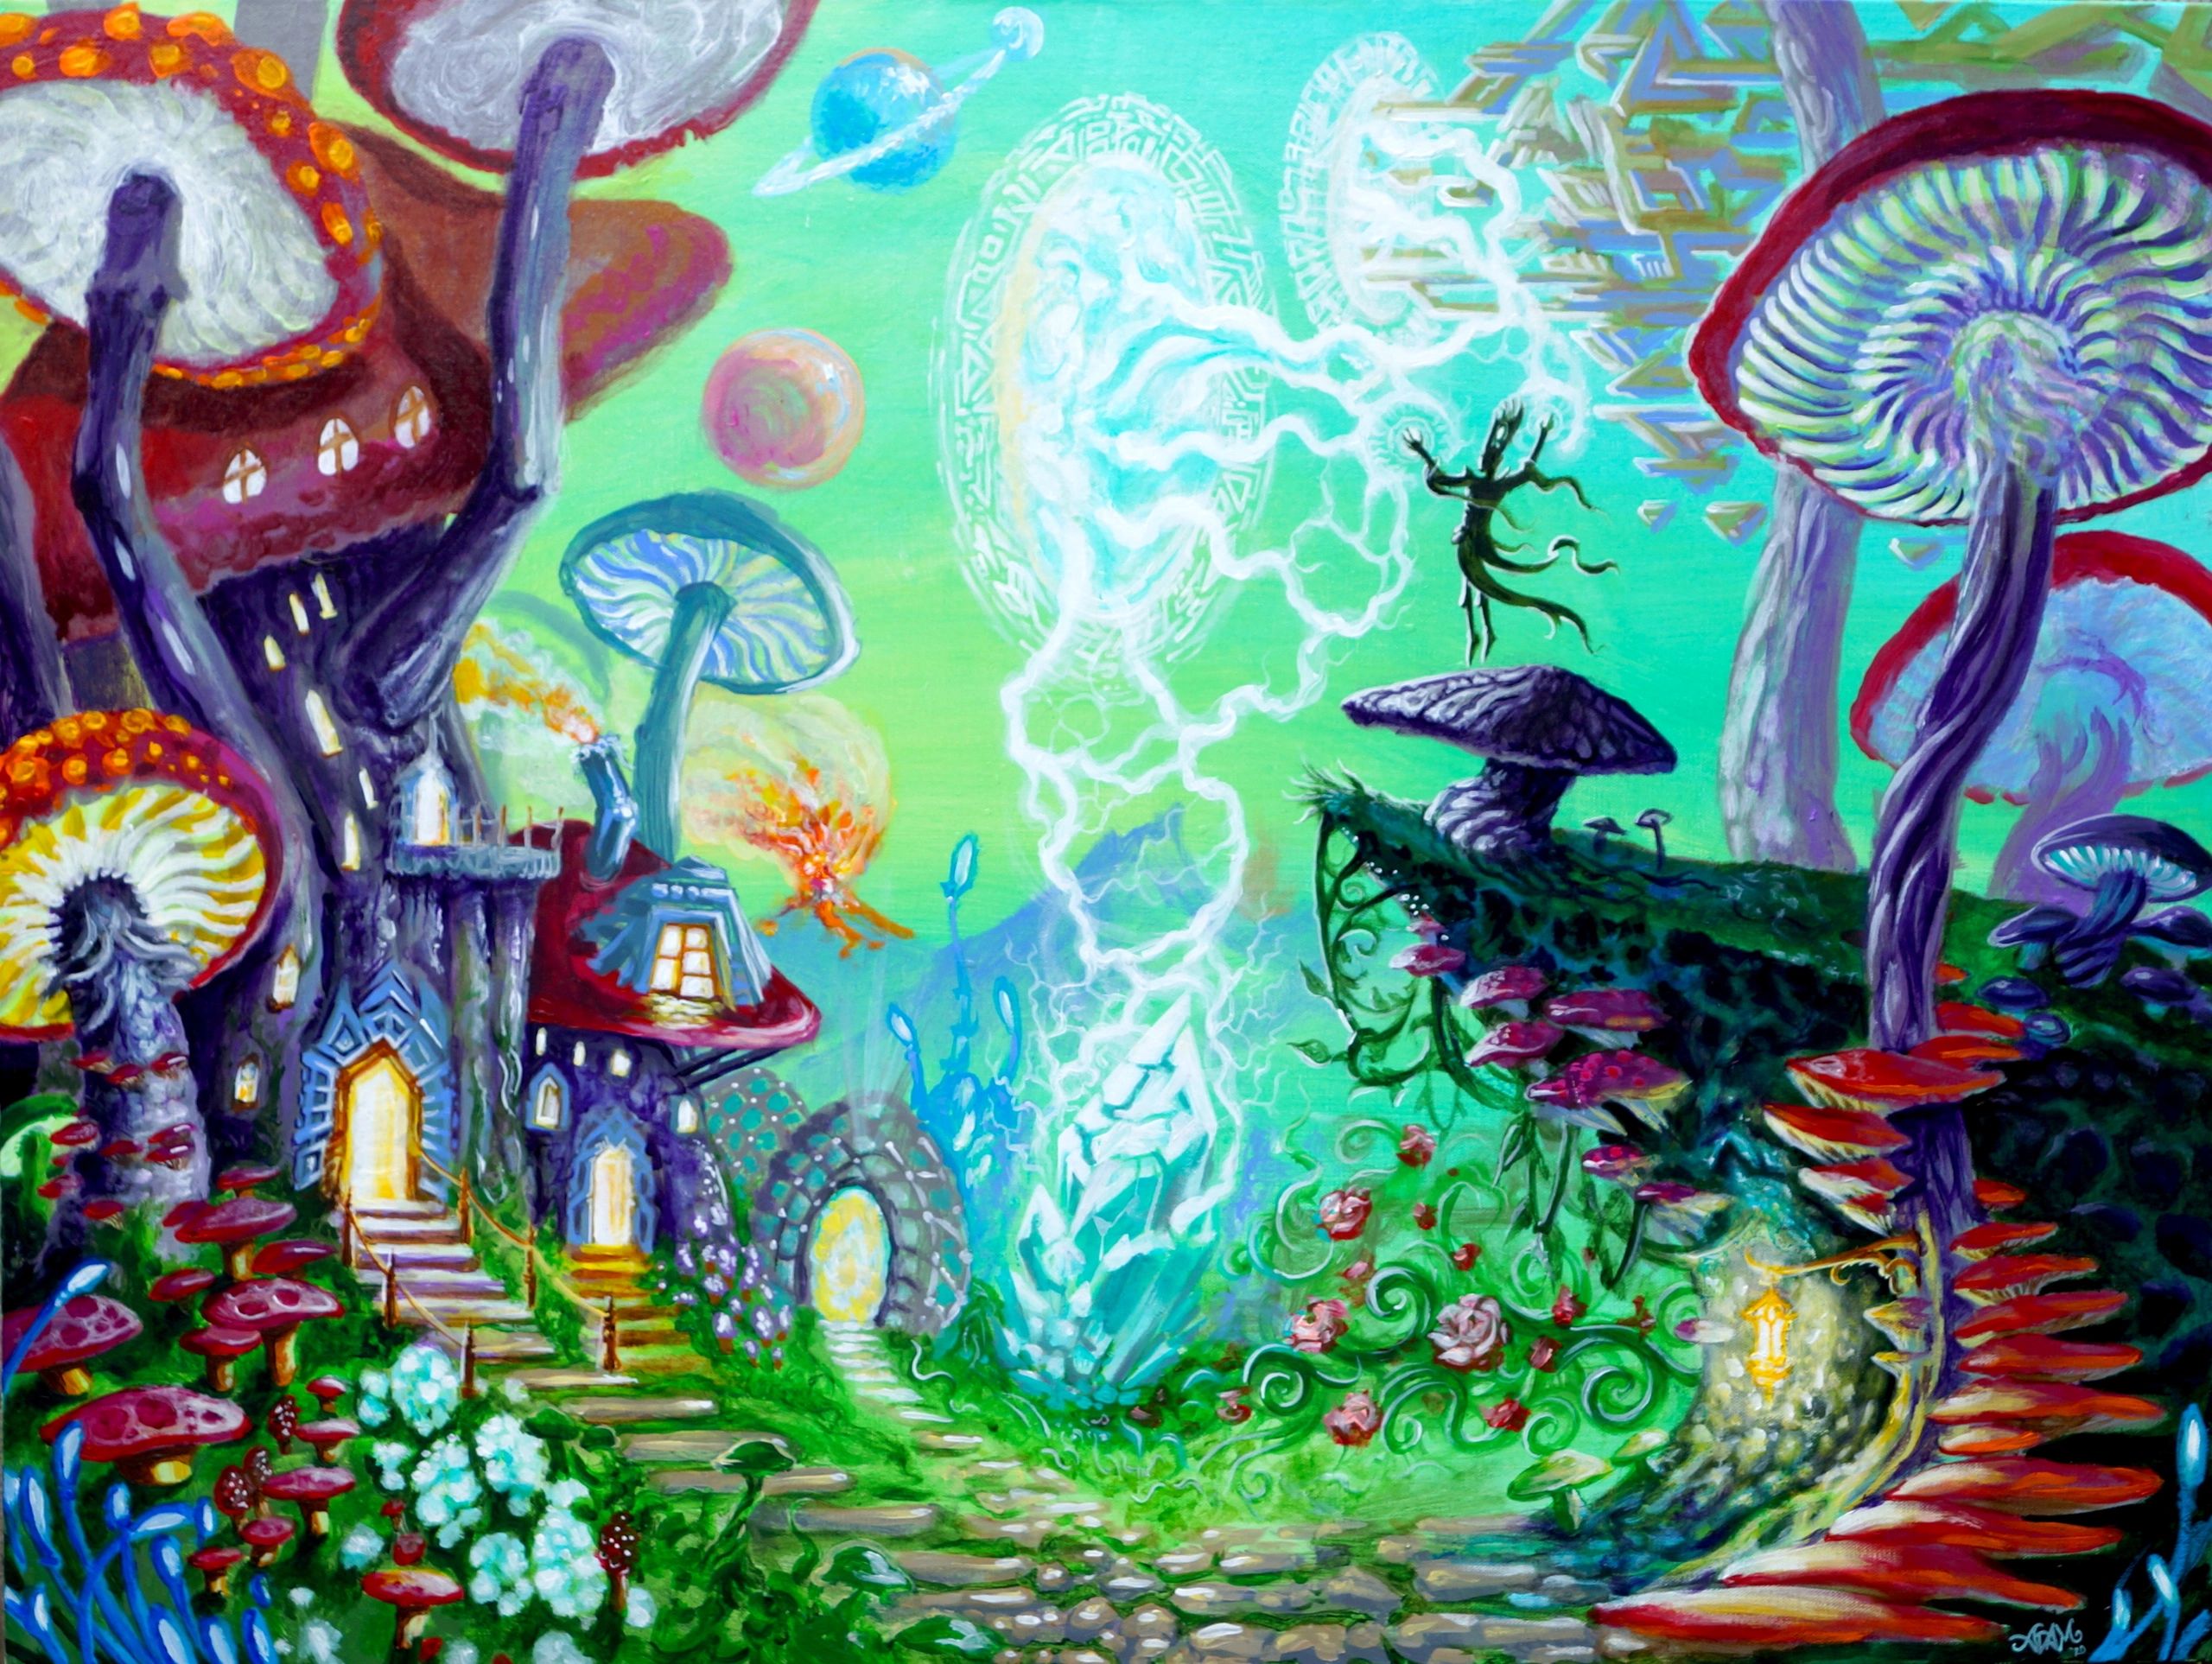 adam france, fine art, painter, mushroom wizard